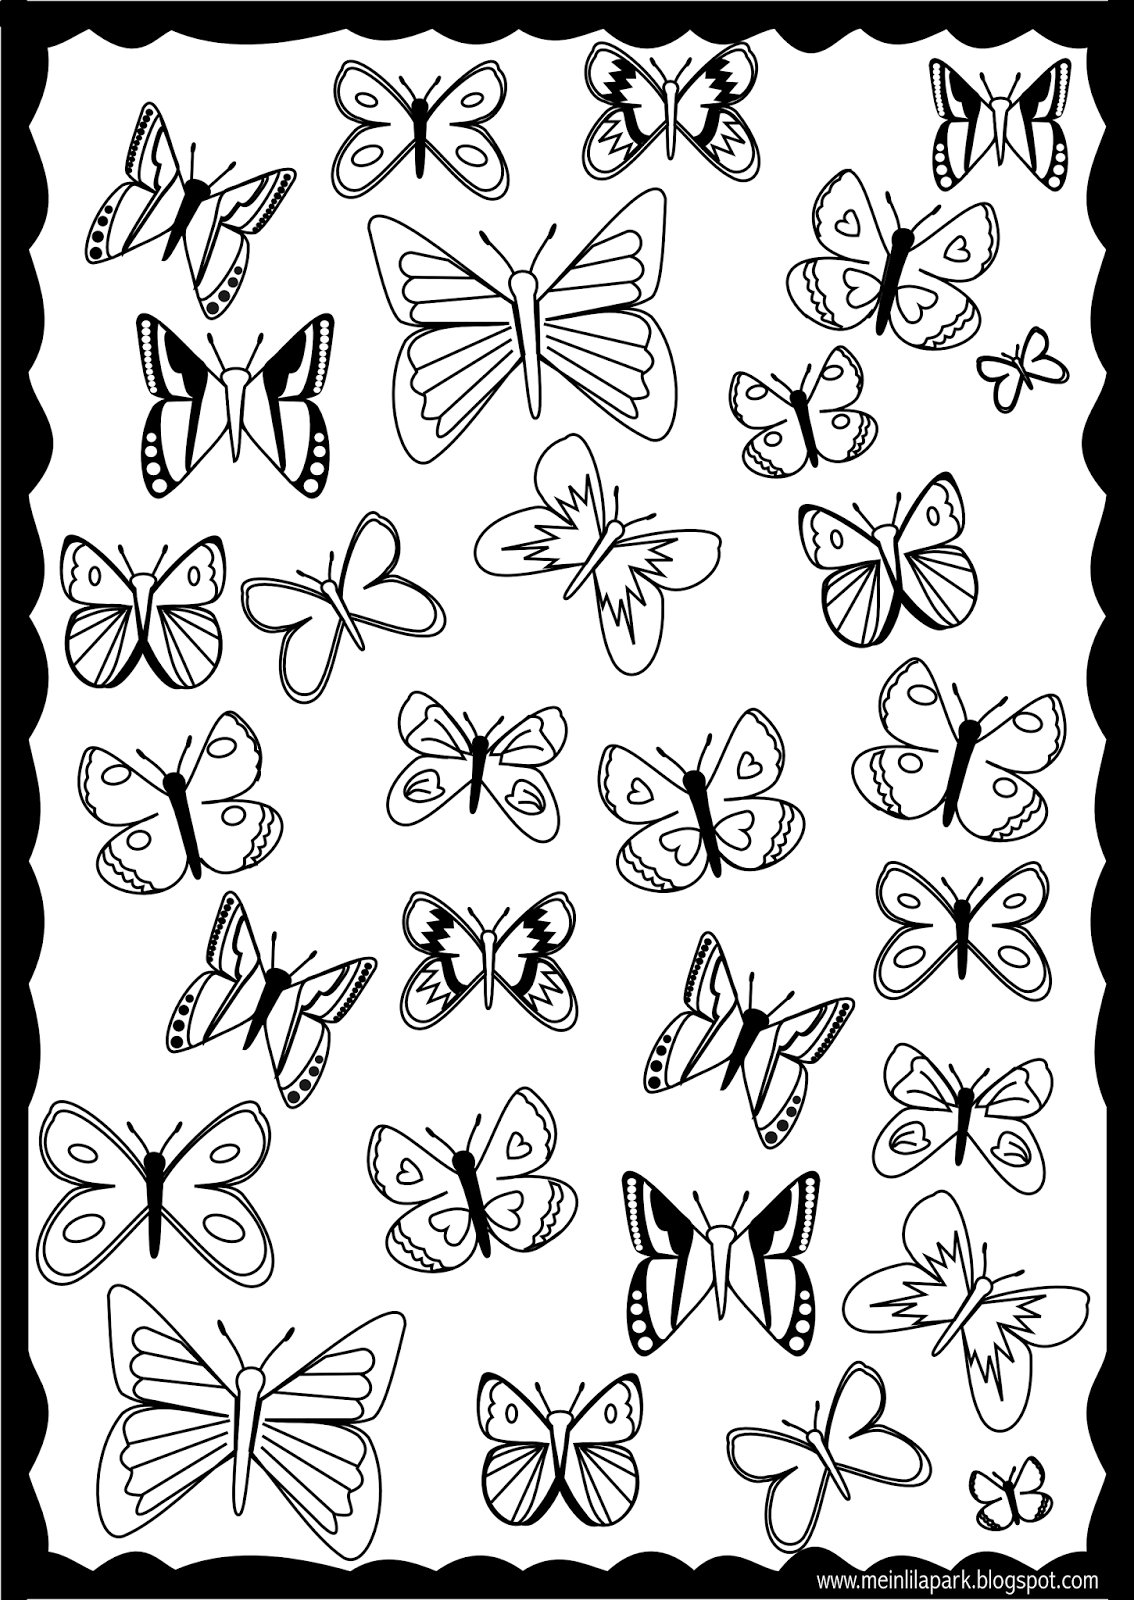 free-printable-butterfly-coloring-page-ausdruckbare-ausmalseite